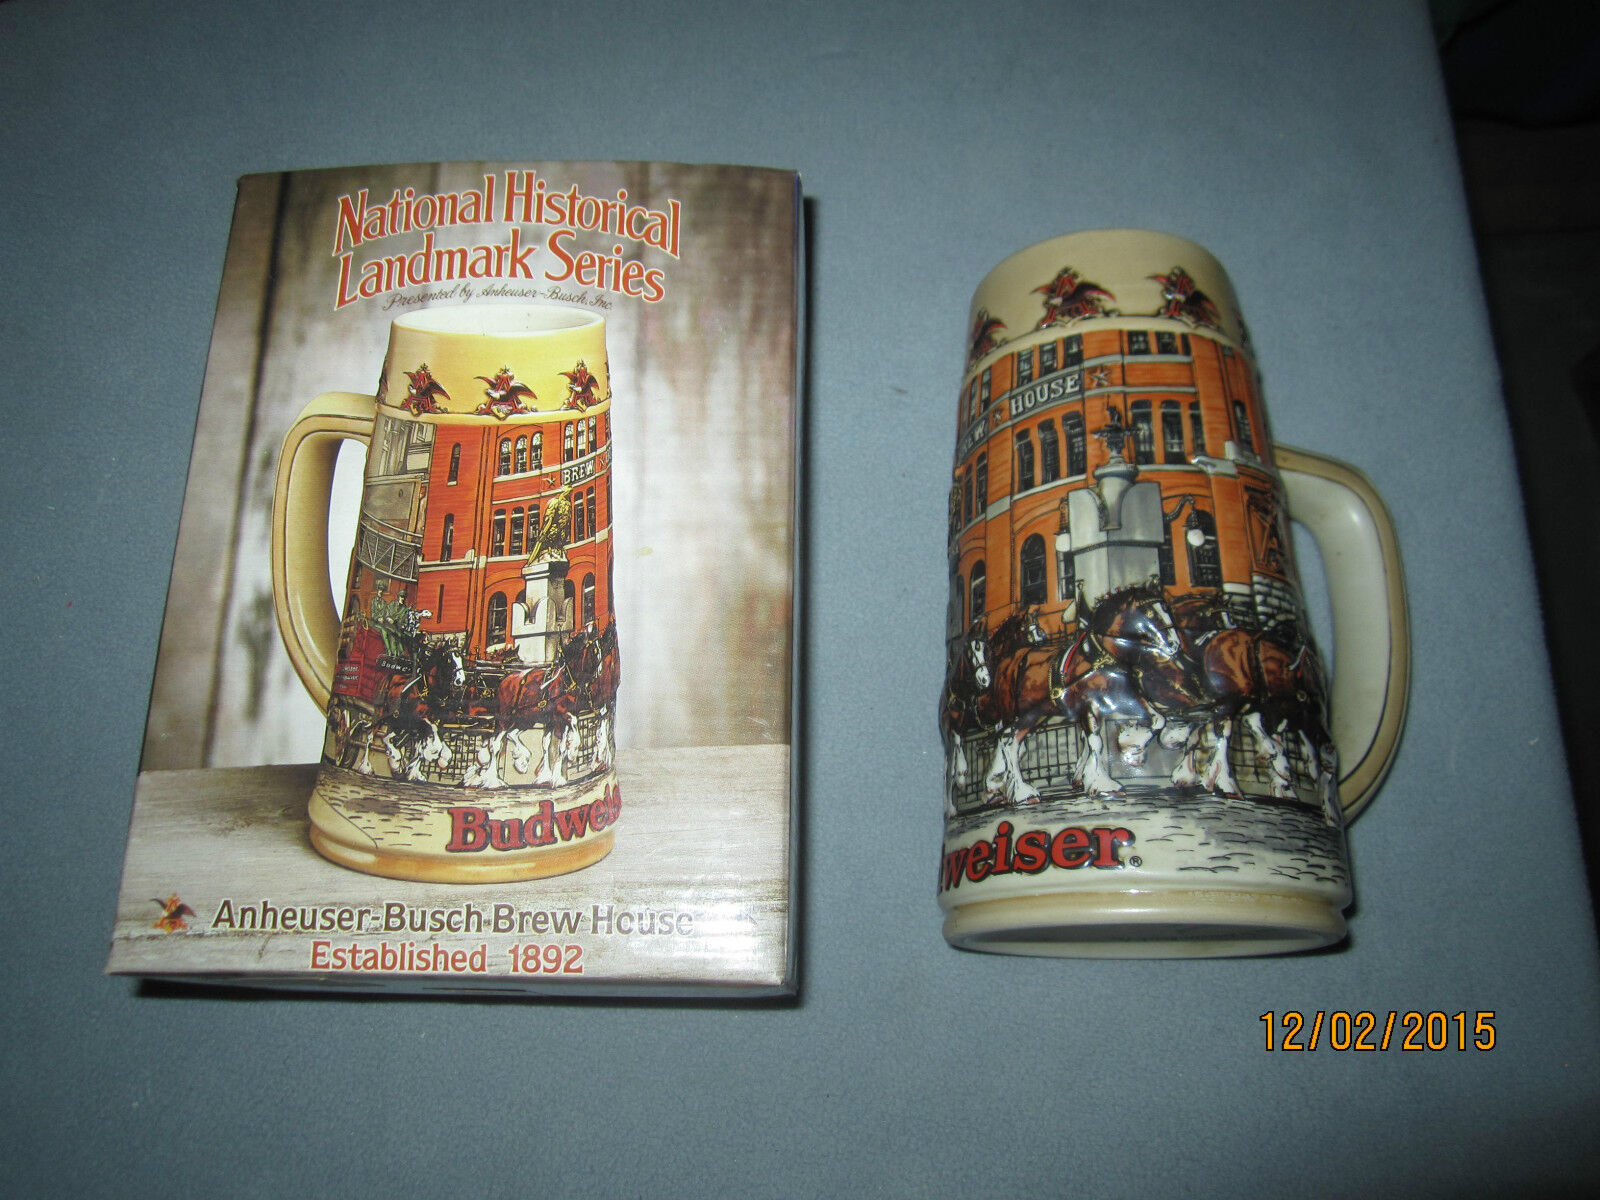 1986 Budweiser National Historical Landmark Series Beer Stein - Brew House 1892